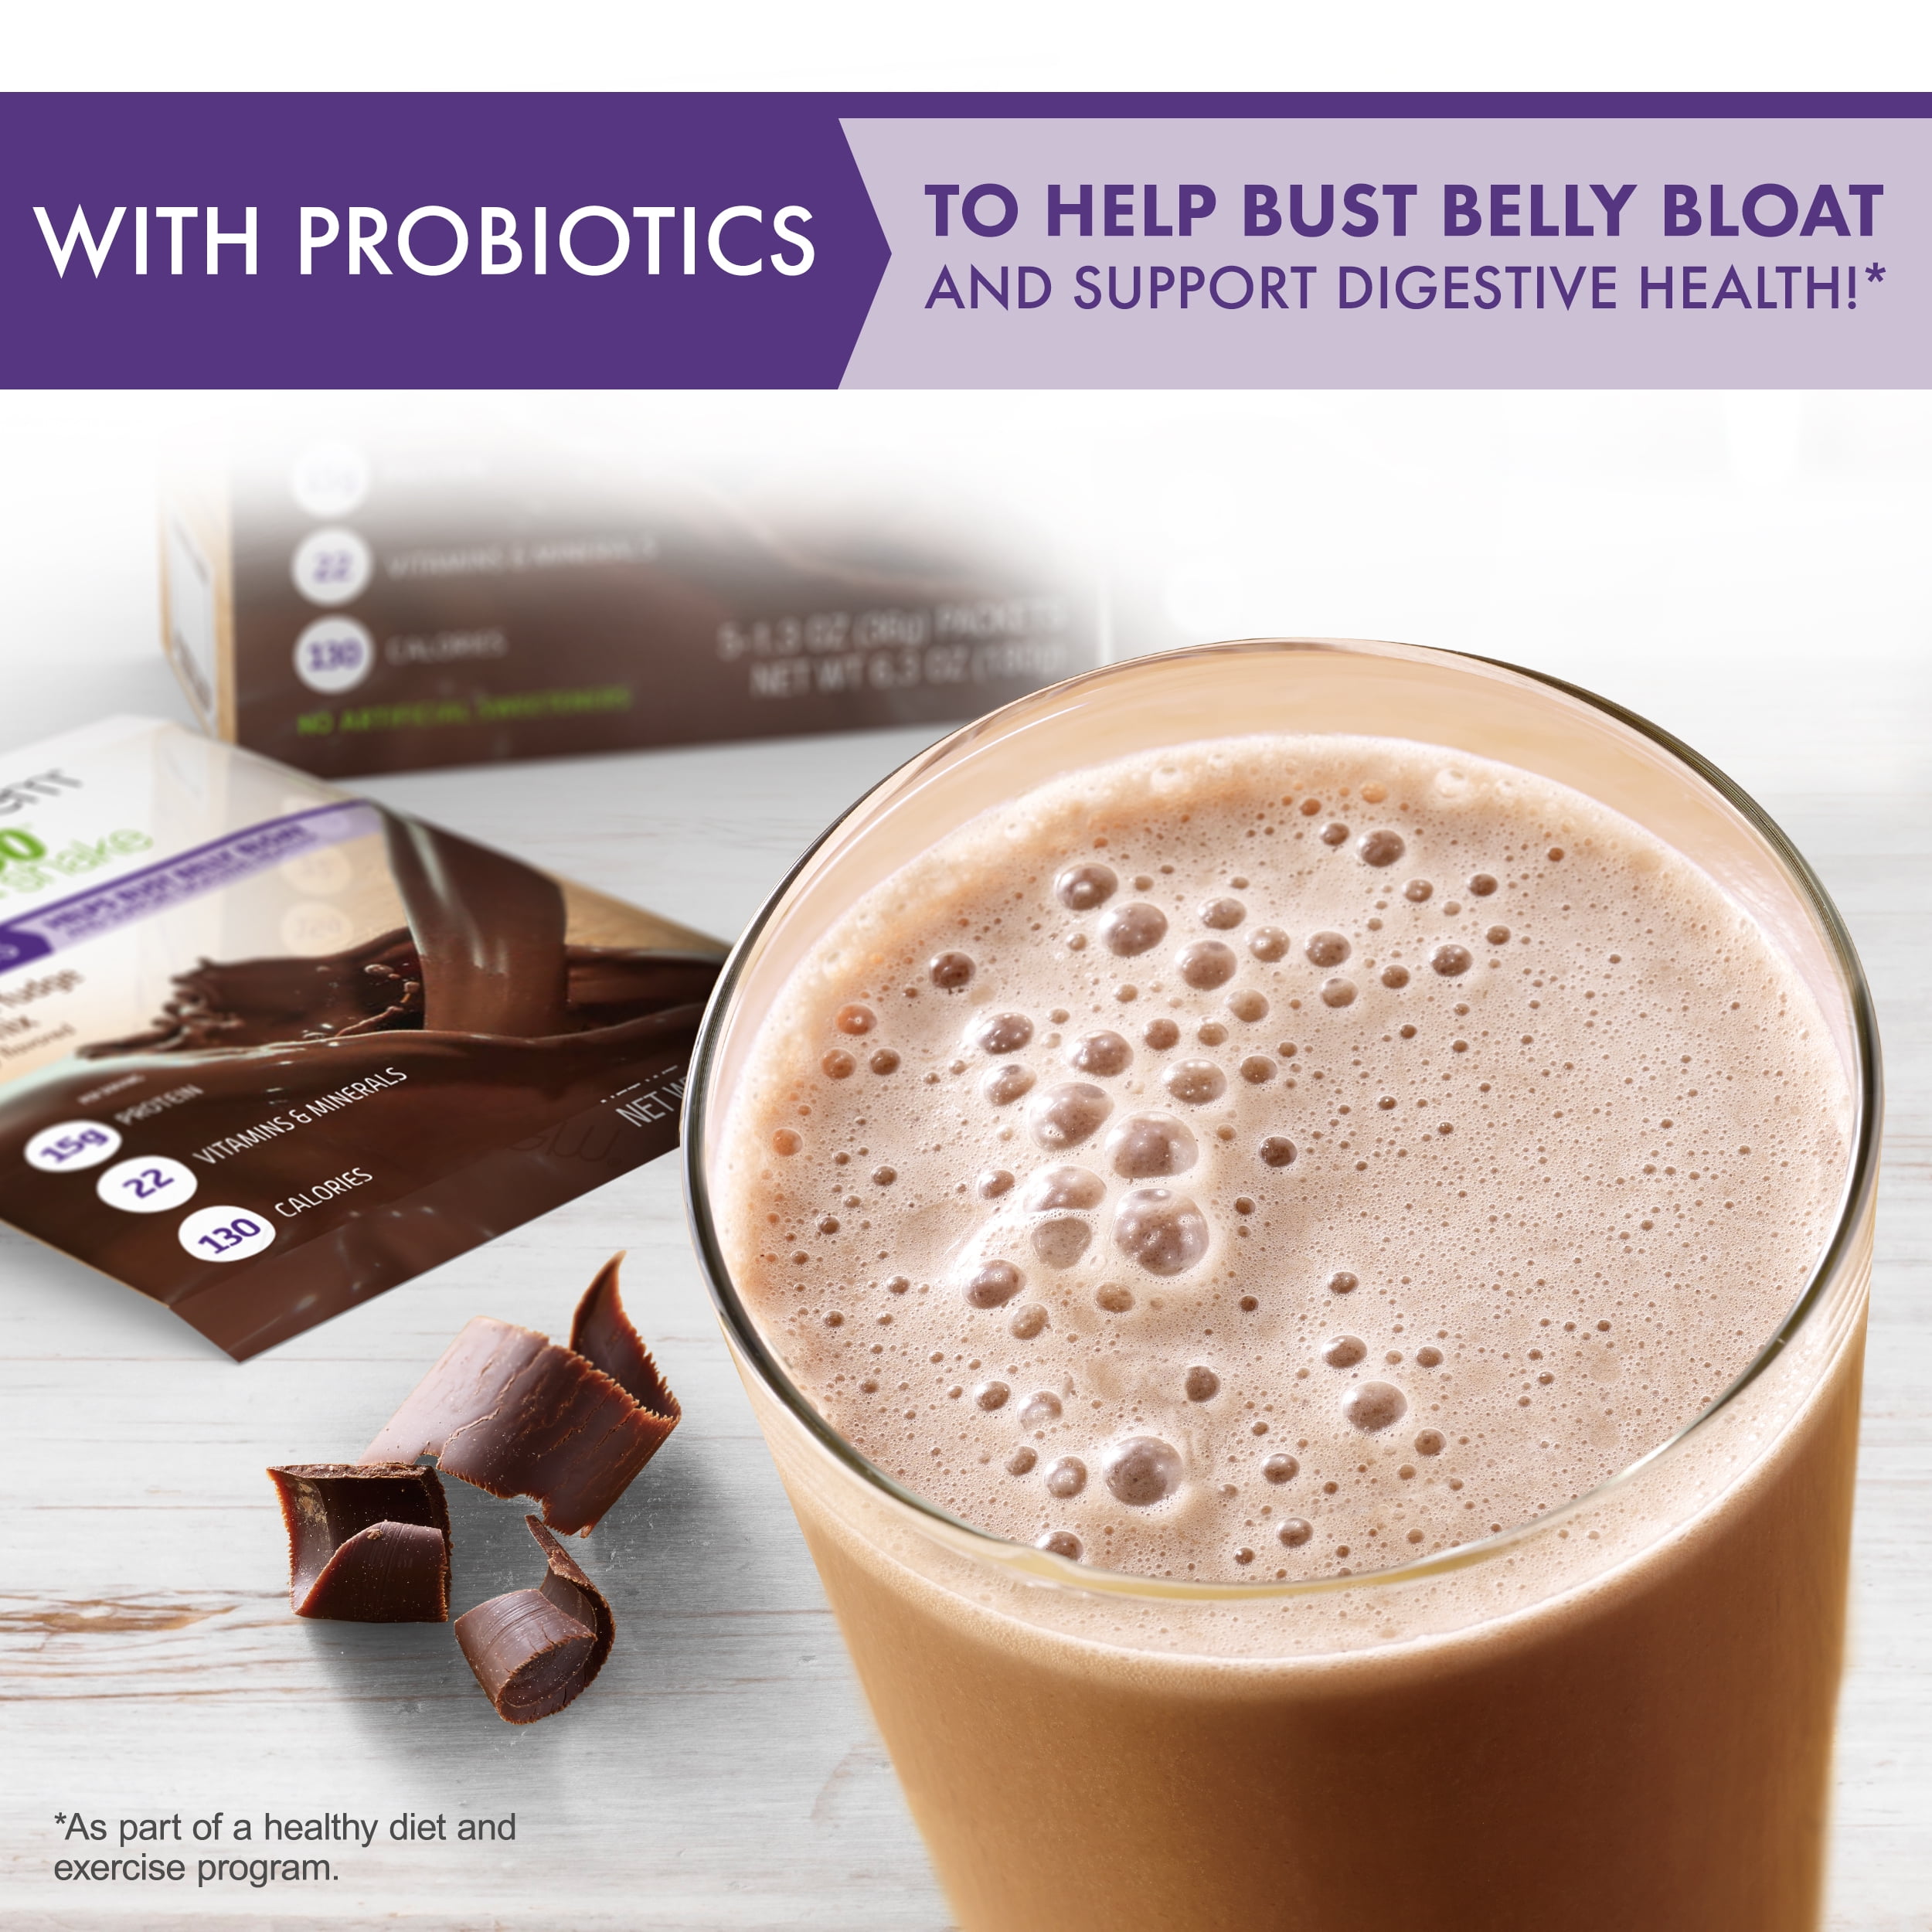  Nutrisystem Turbo Shake Probiotics, Chocolate Shake